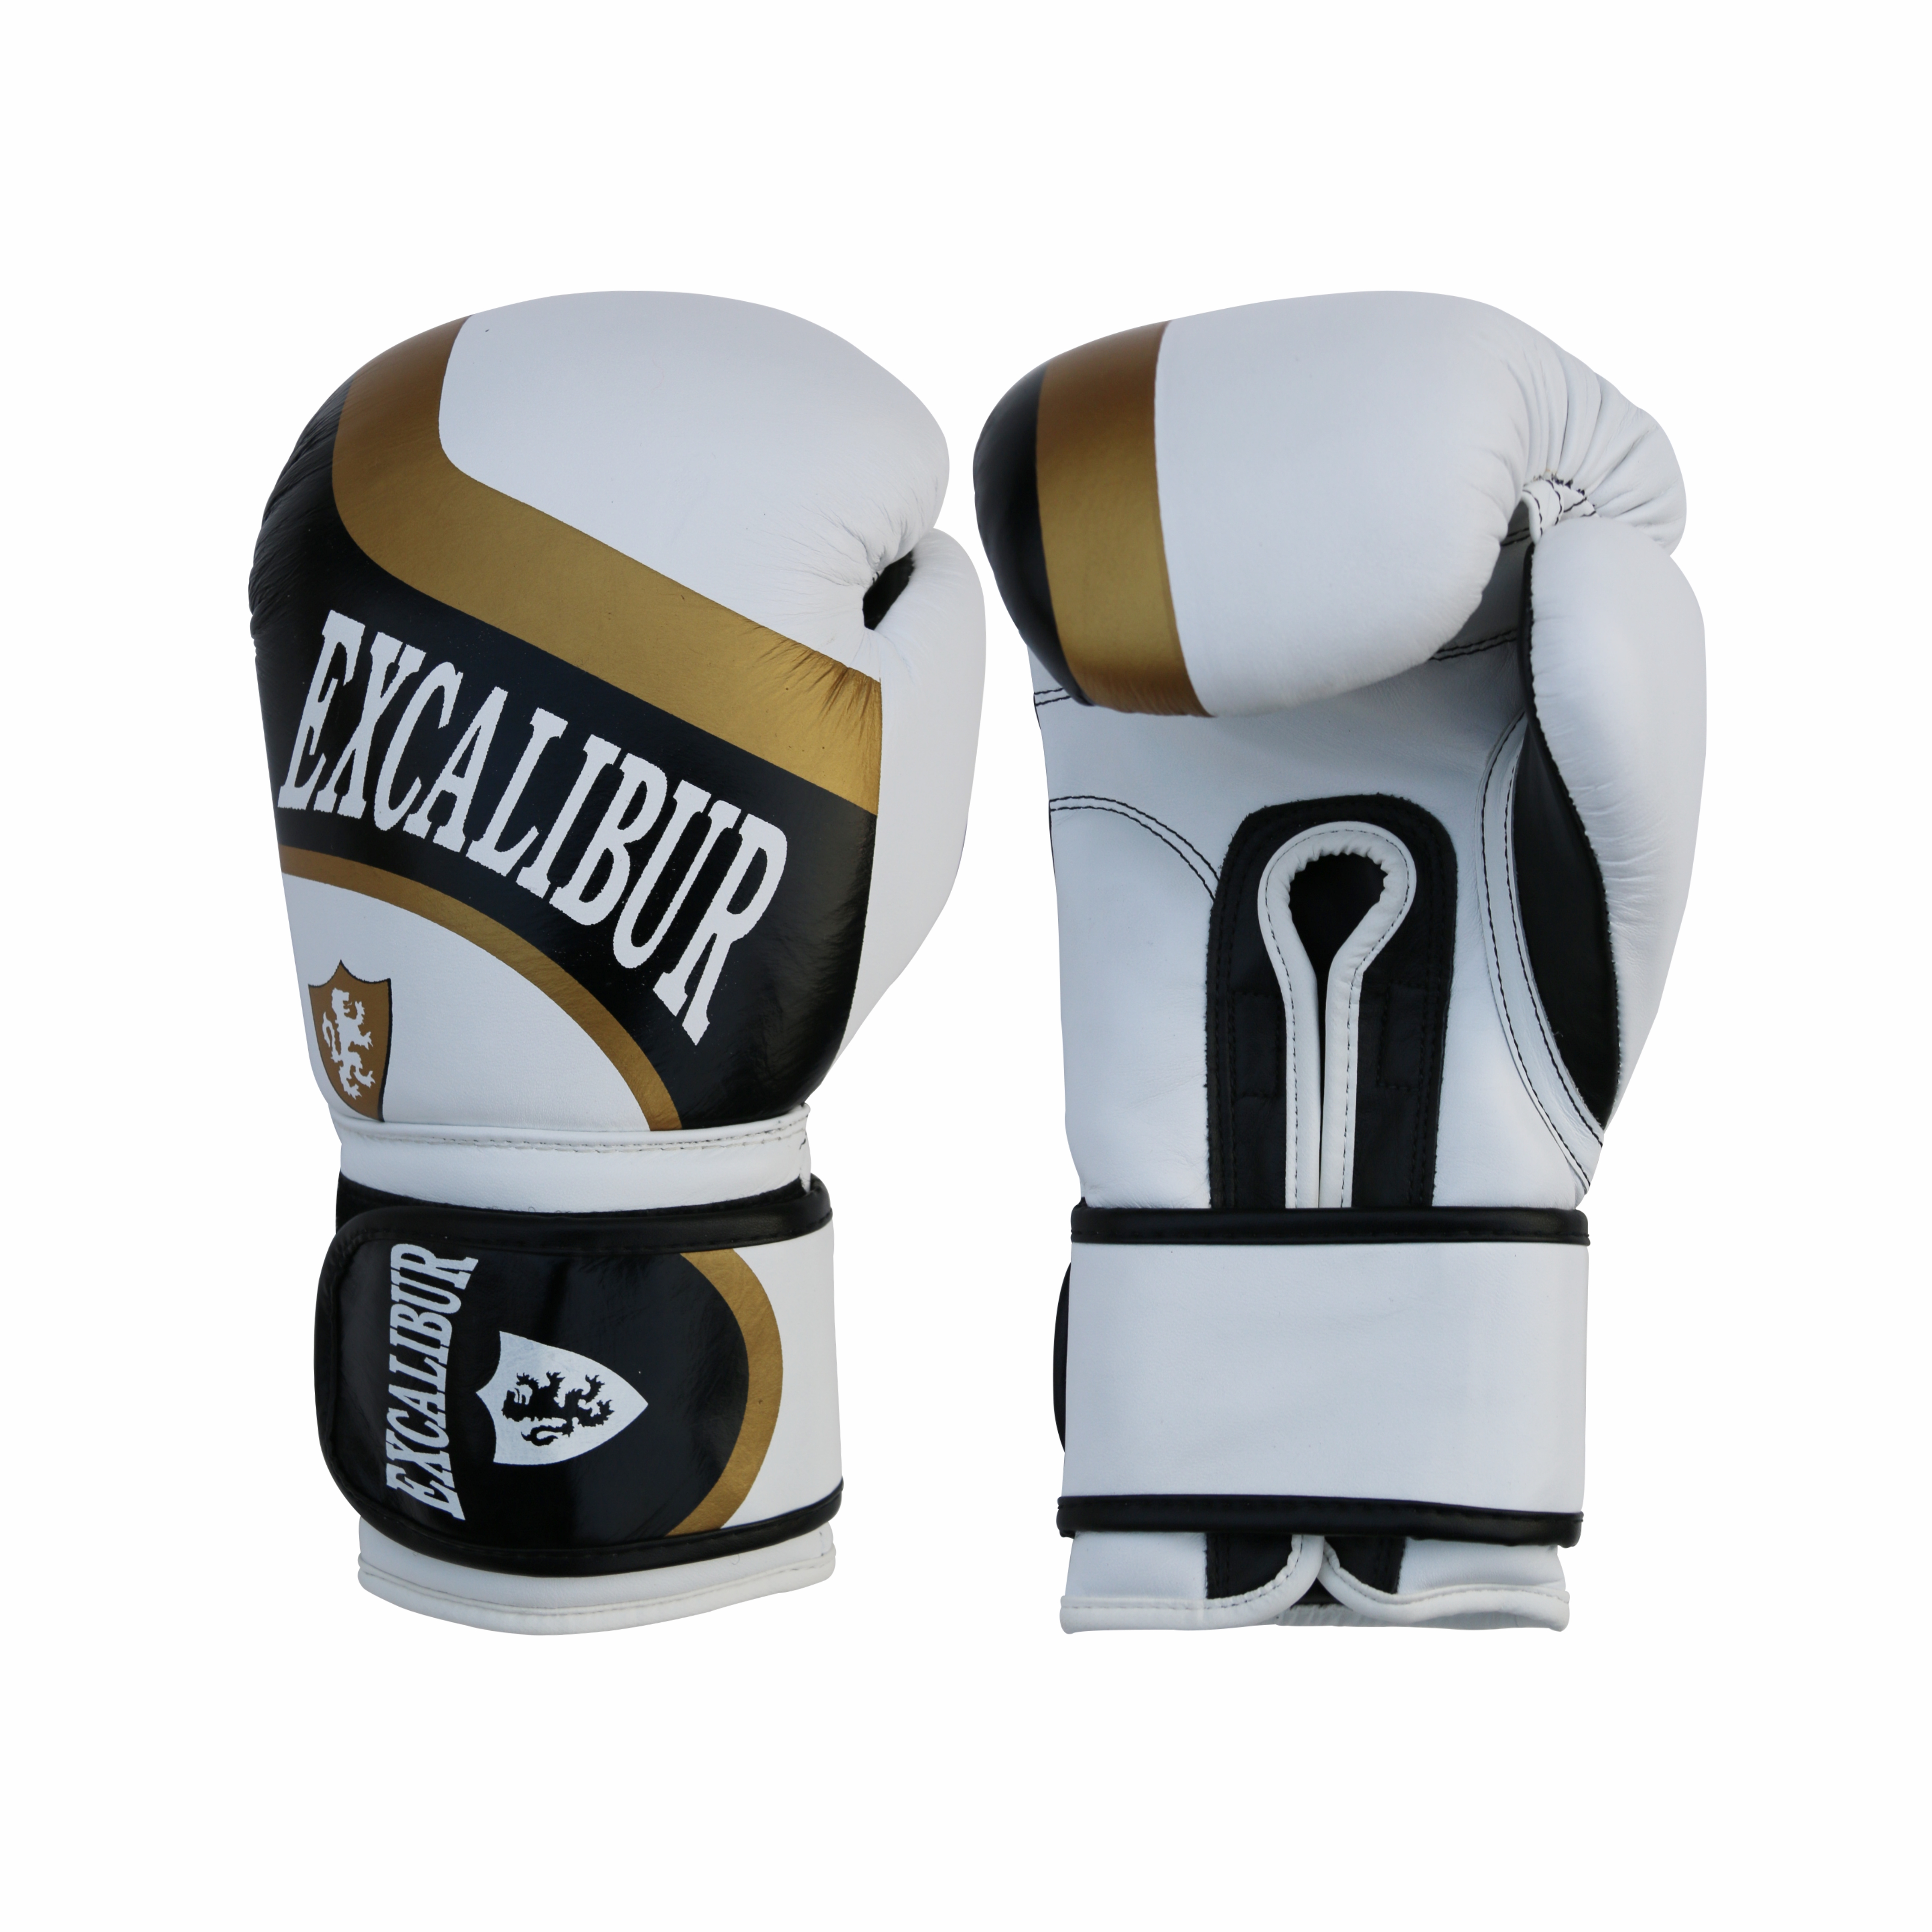 Tiger Boxing Gloves